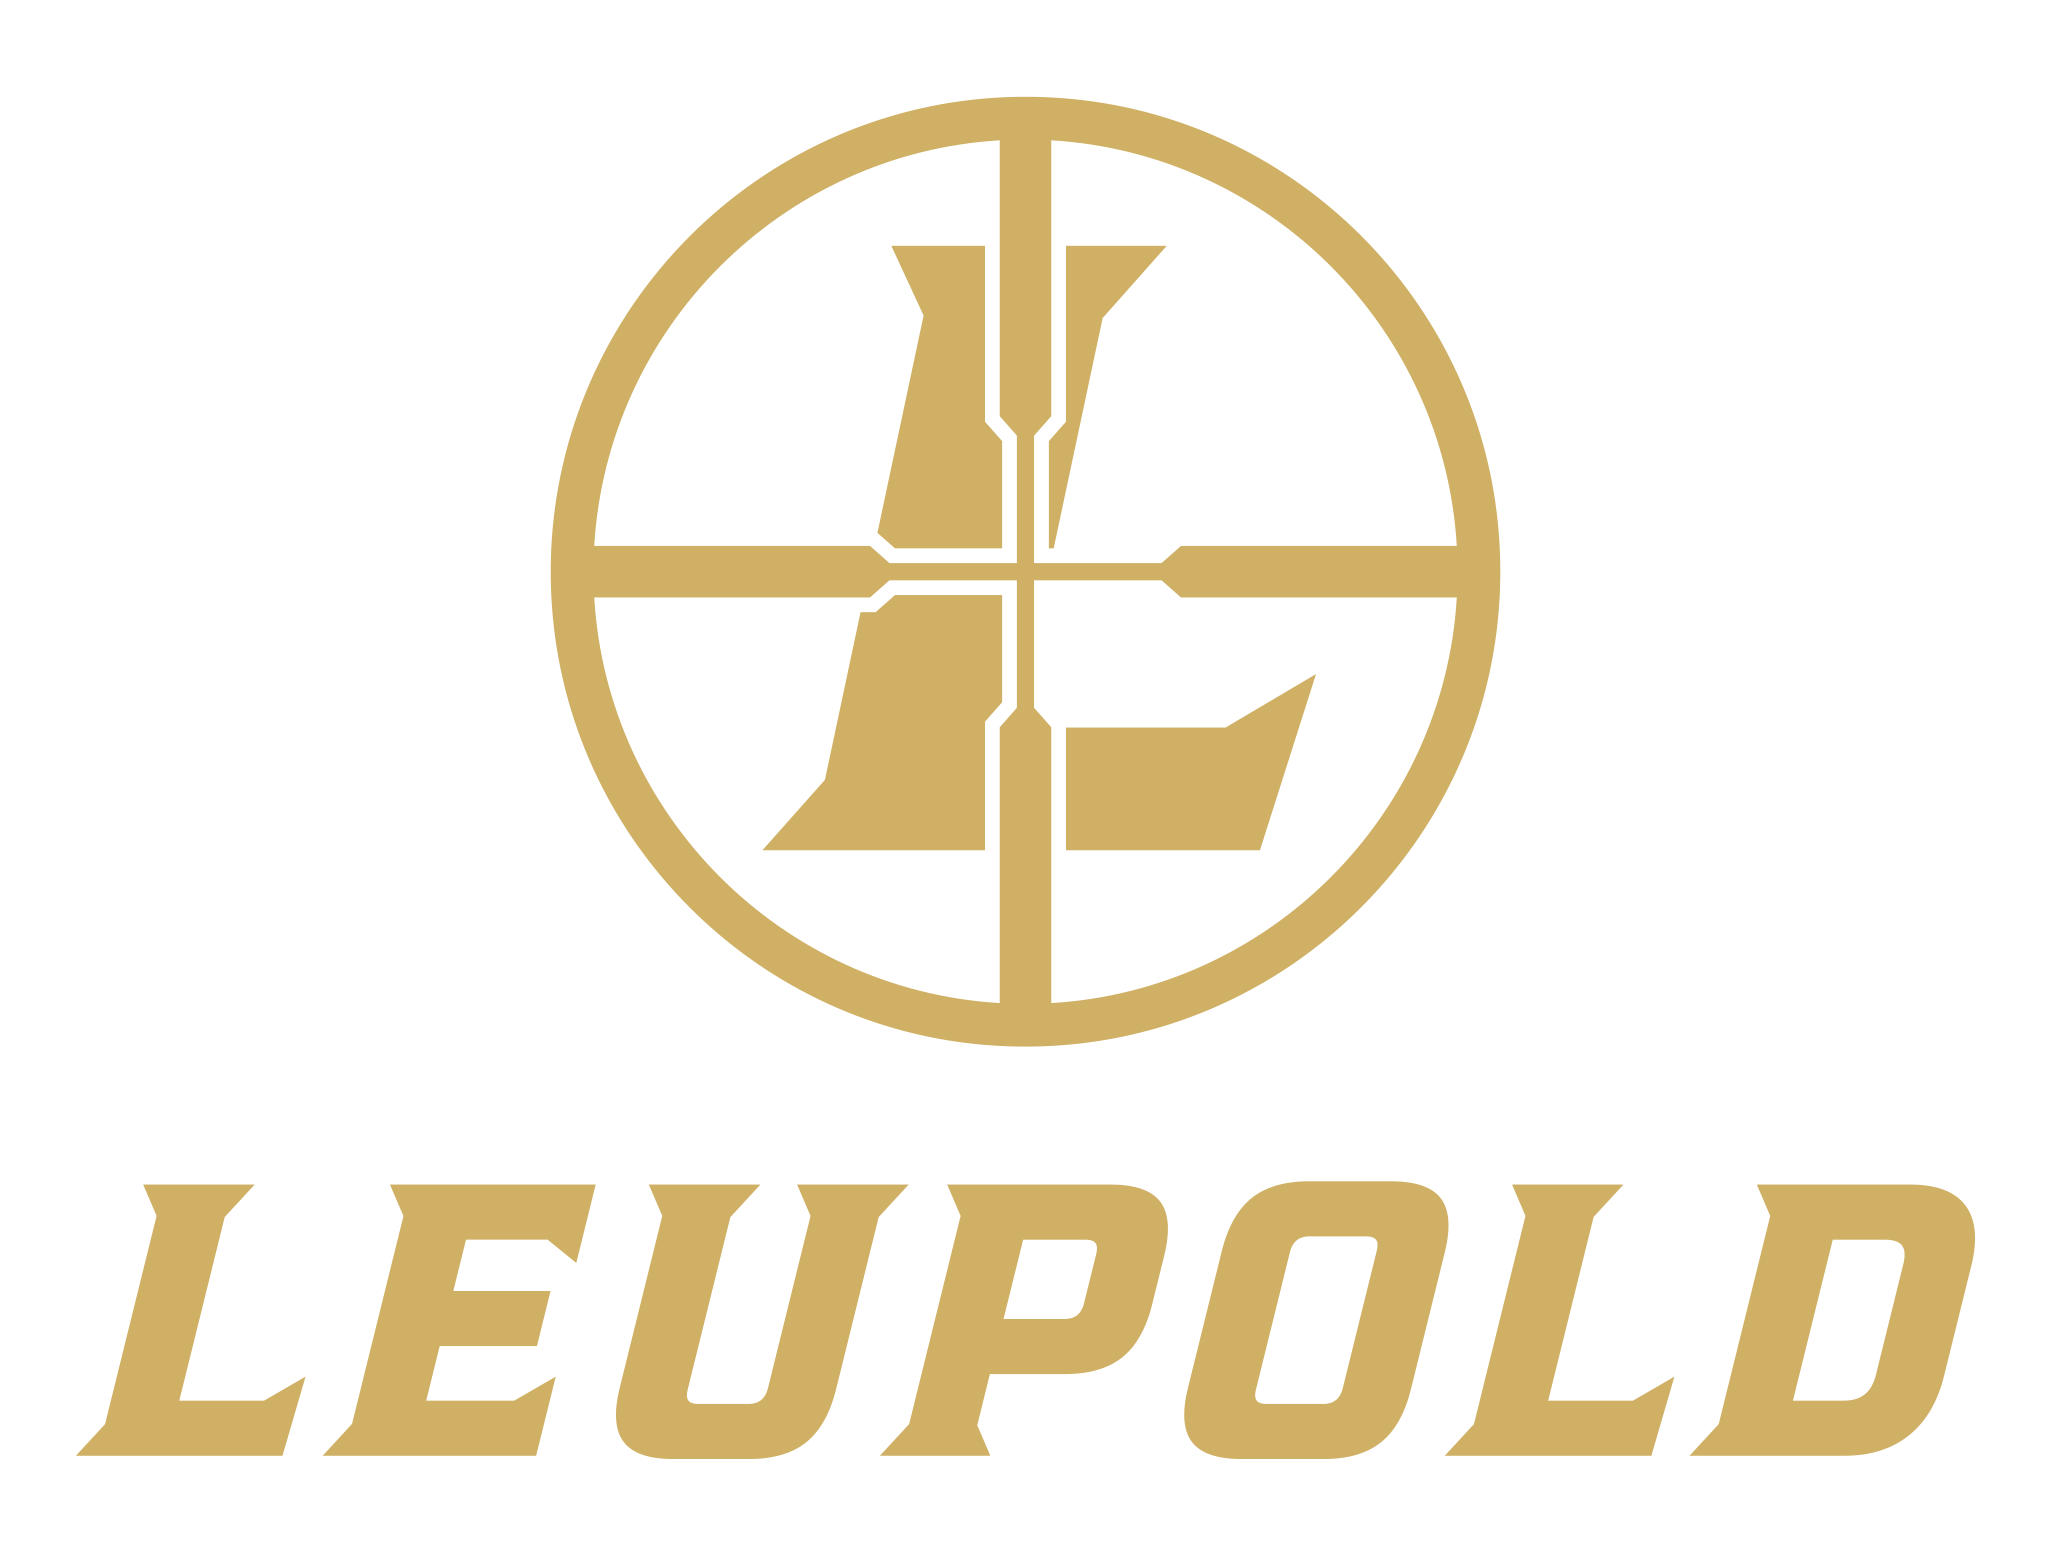 Leupold (США)